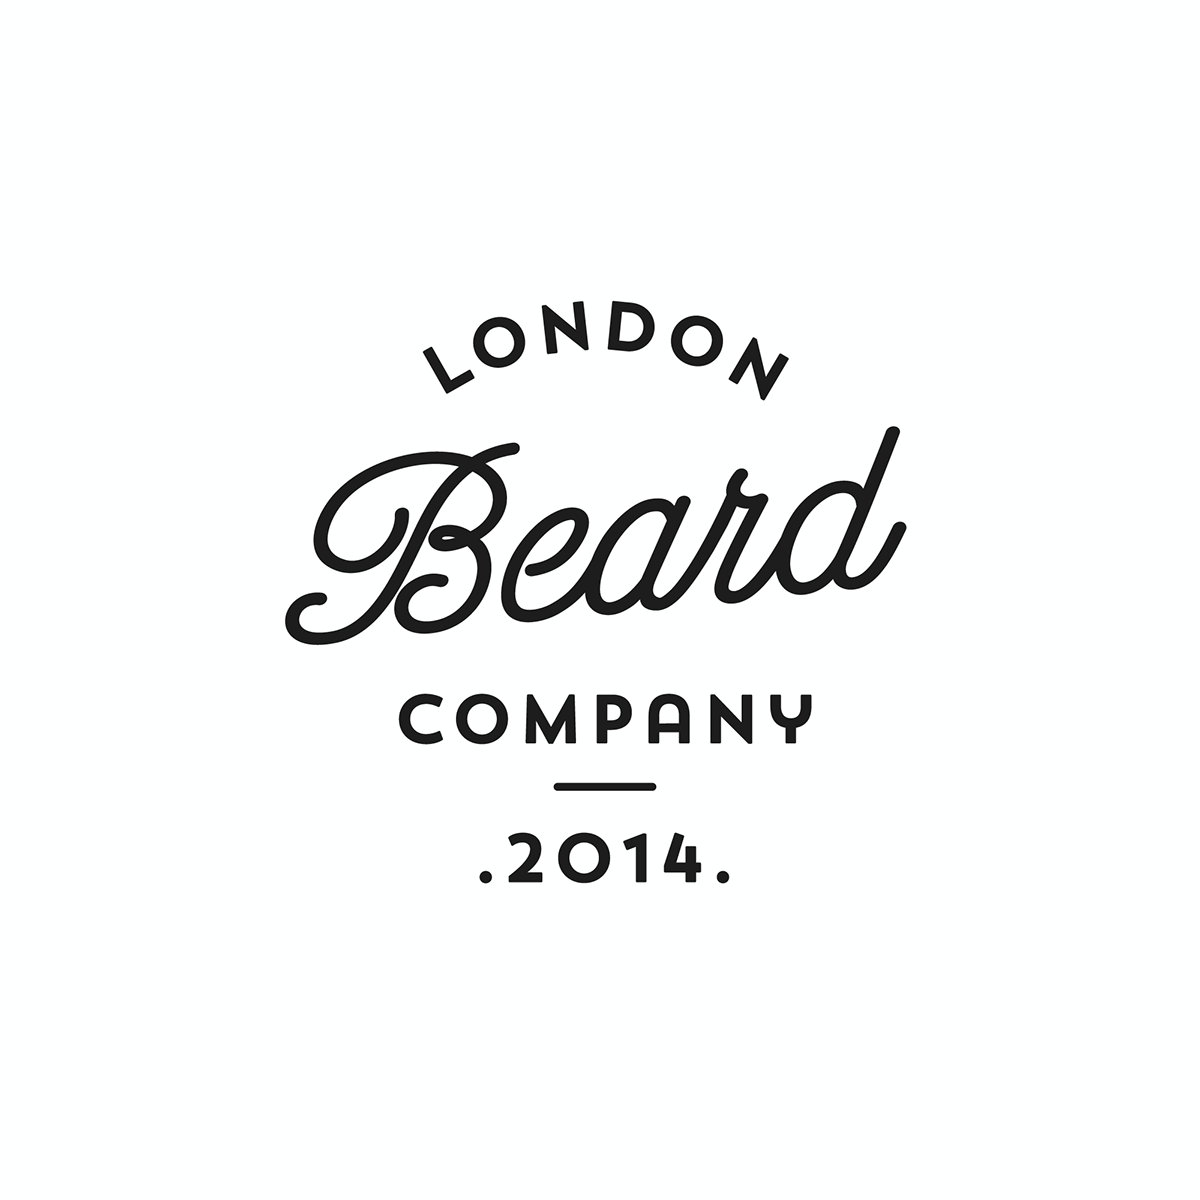 vintagelogo Fortnums londonbeardcompany Logotype identity beardoil barbers logo logos ed vandyke